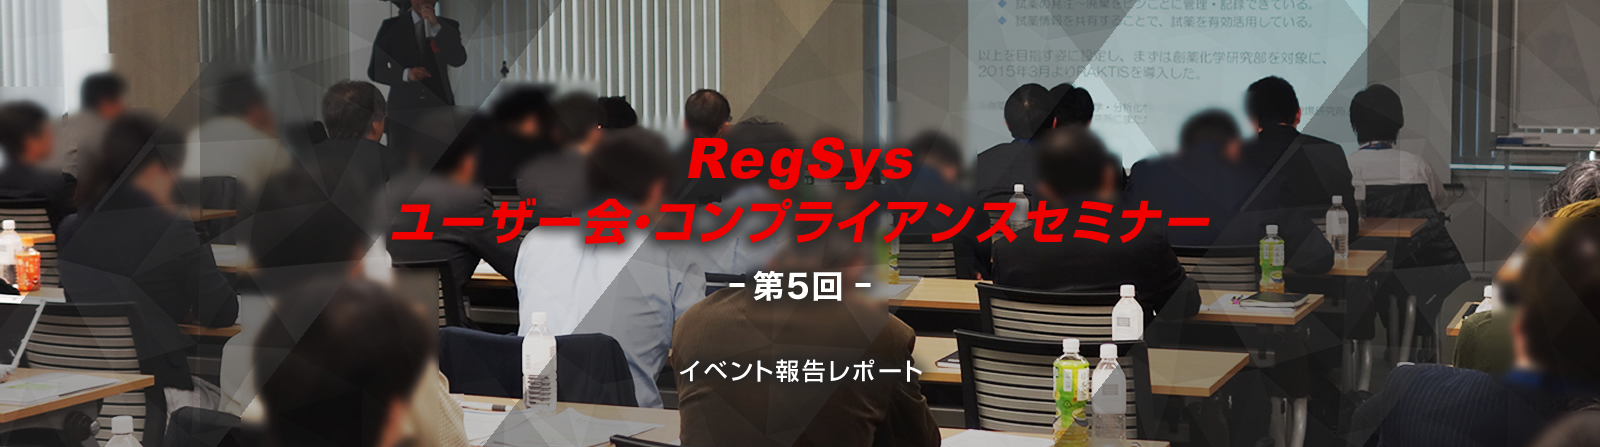 RegSysユーザー会・コンプライアンスセミナー 第5回 イベント報告レポート